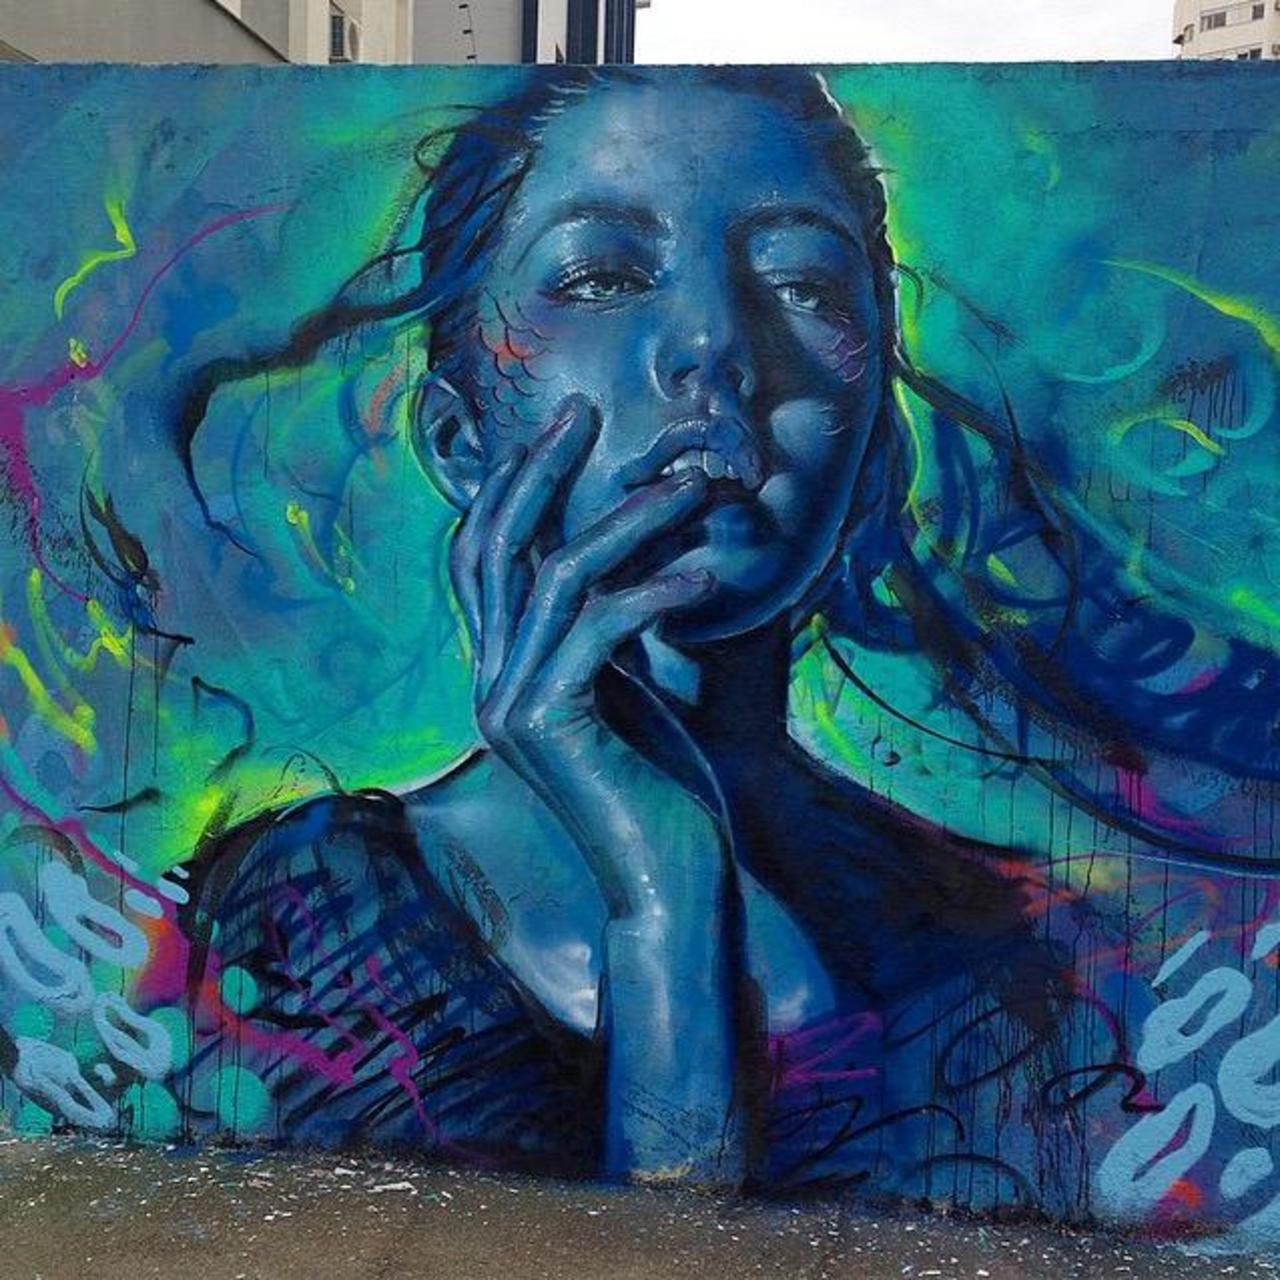 Thiago Valdi new Street Art piece titled 'Day Dreamer'

#art #mural #graffiti #streetart http://t.co/aSdzezL7QO